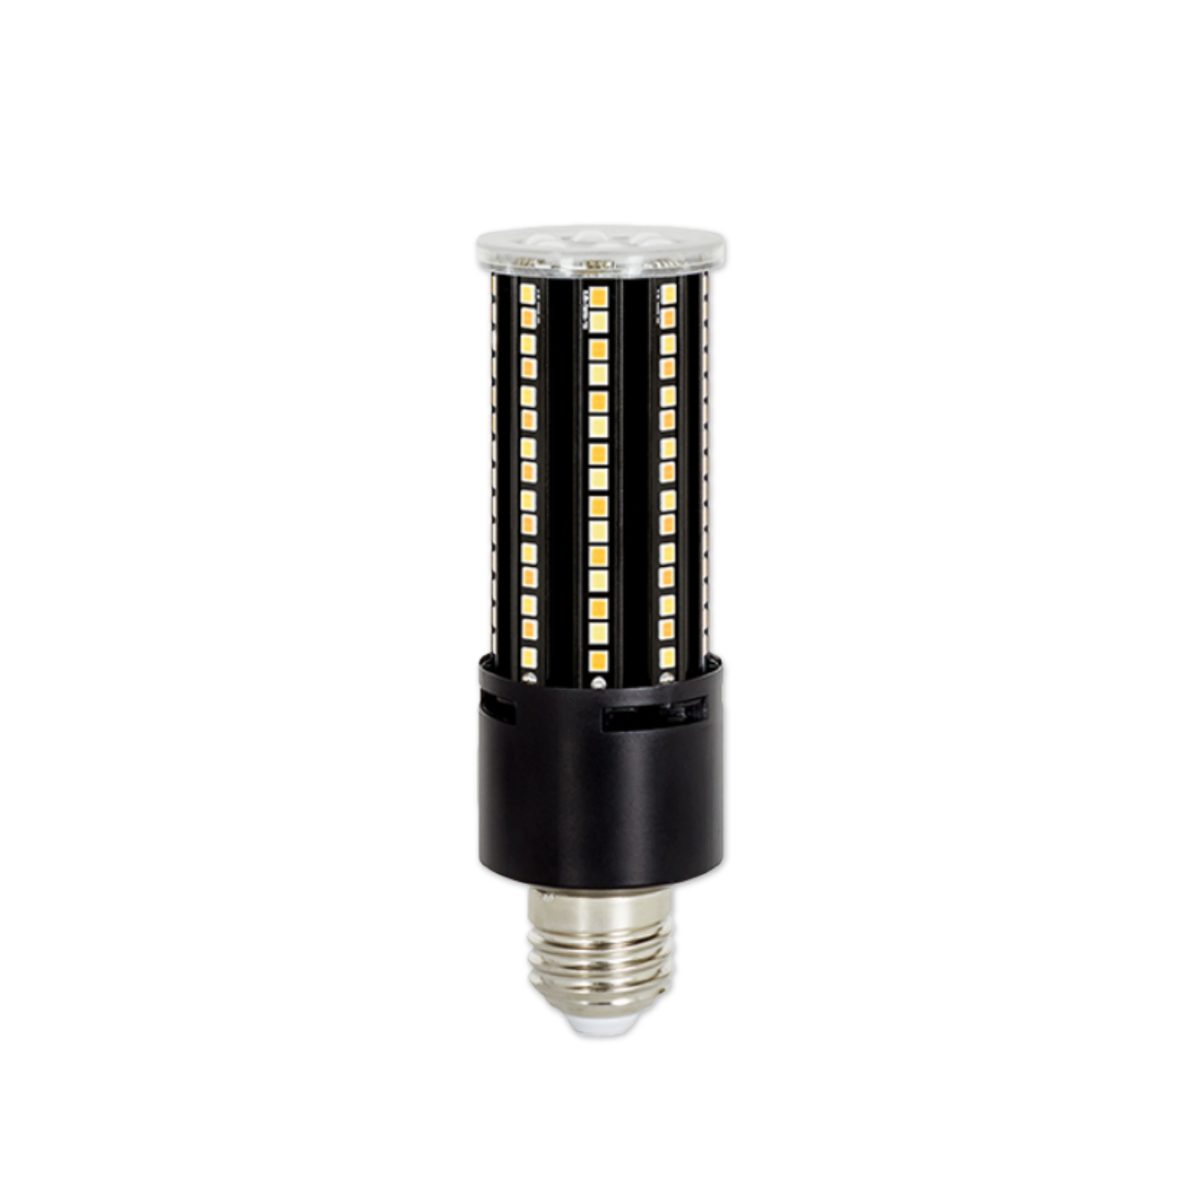 Tala LED LED-Leuchtmittel Dimm E27, - - Warm II 2200-2700K E27, ENGINE 22W, LIGHT Warmweiß, Leuchtmittel tala to by